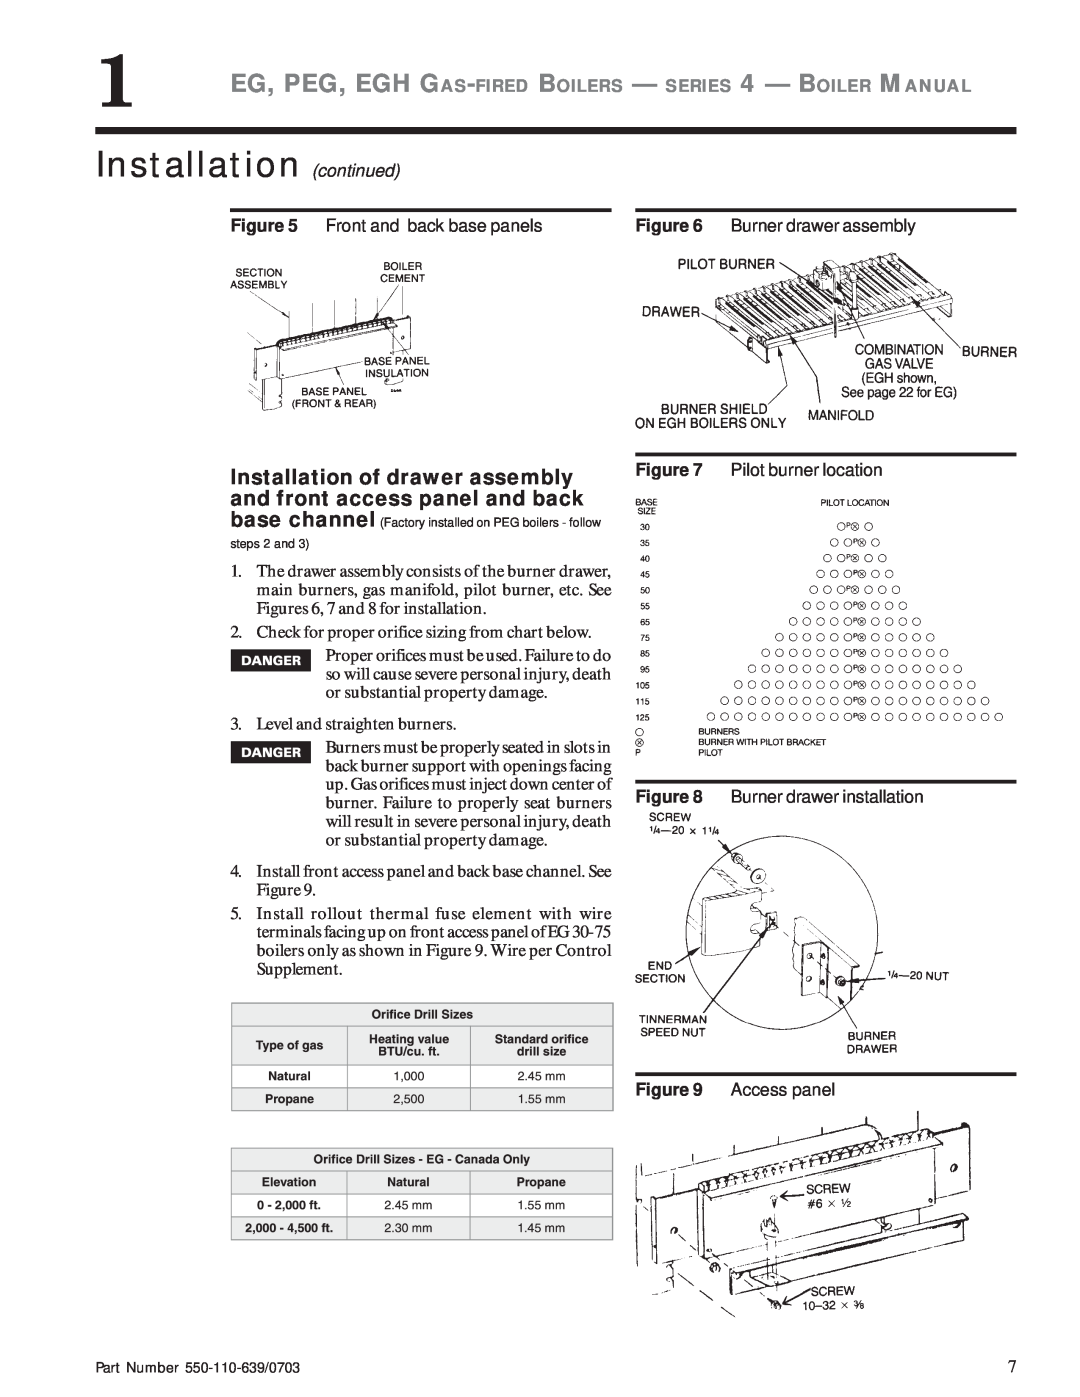 Weil-McLain EG manual Installation continued, Front and back base panels, Burner drawer assembly, Pilot burner location 